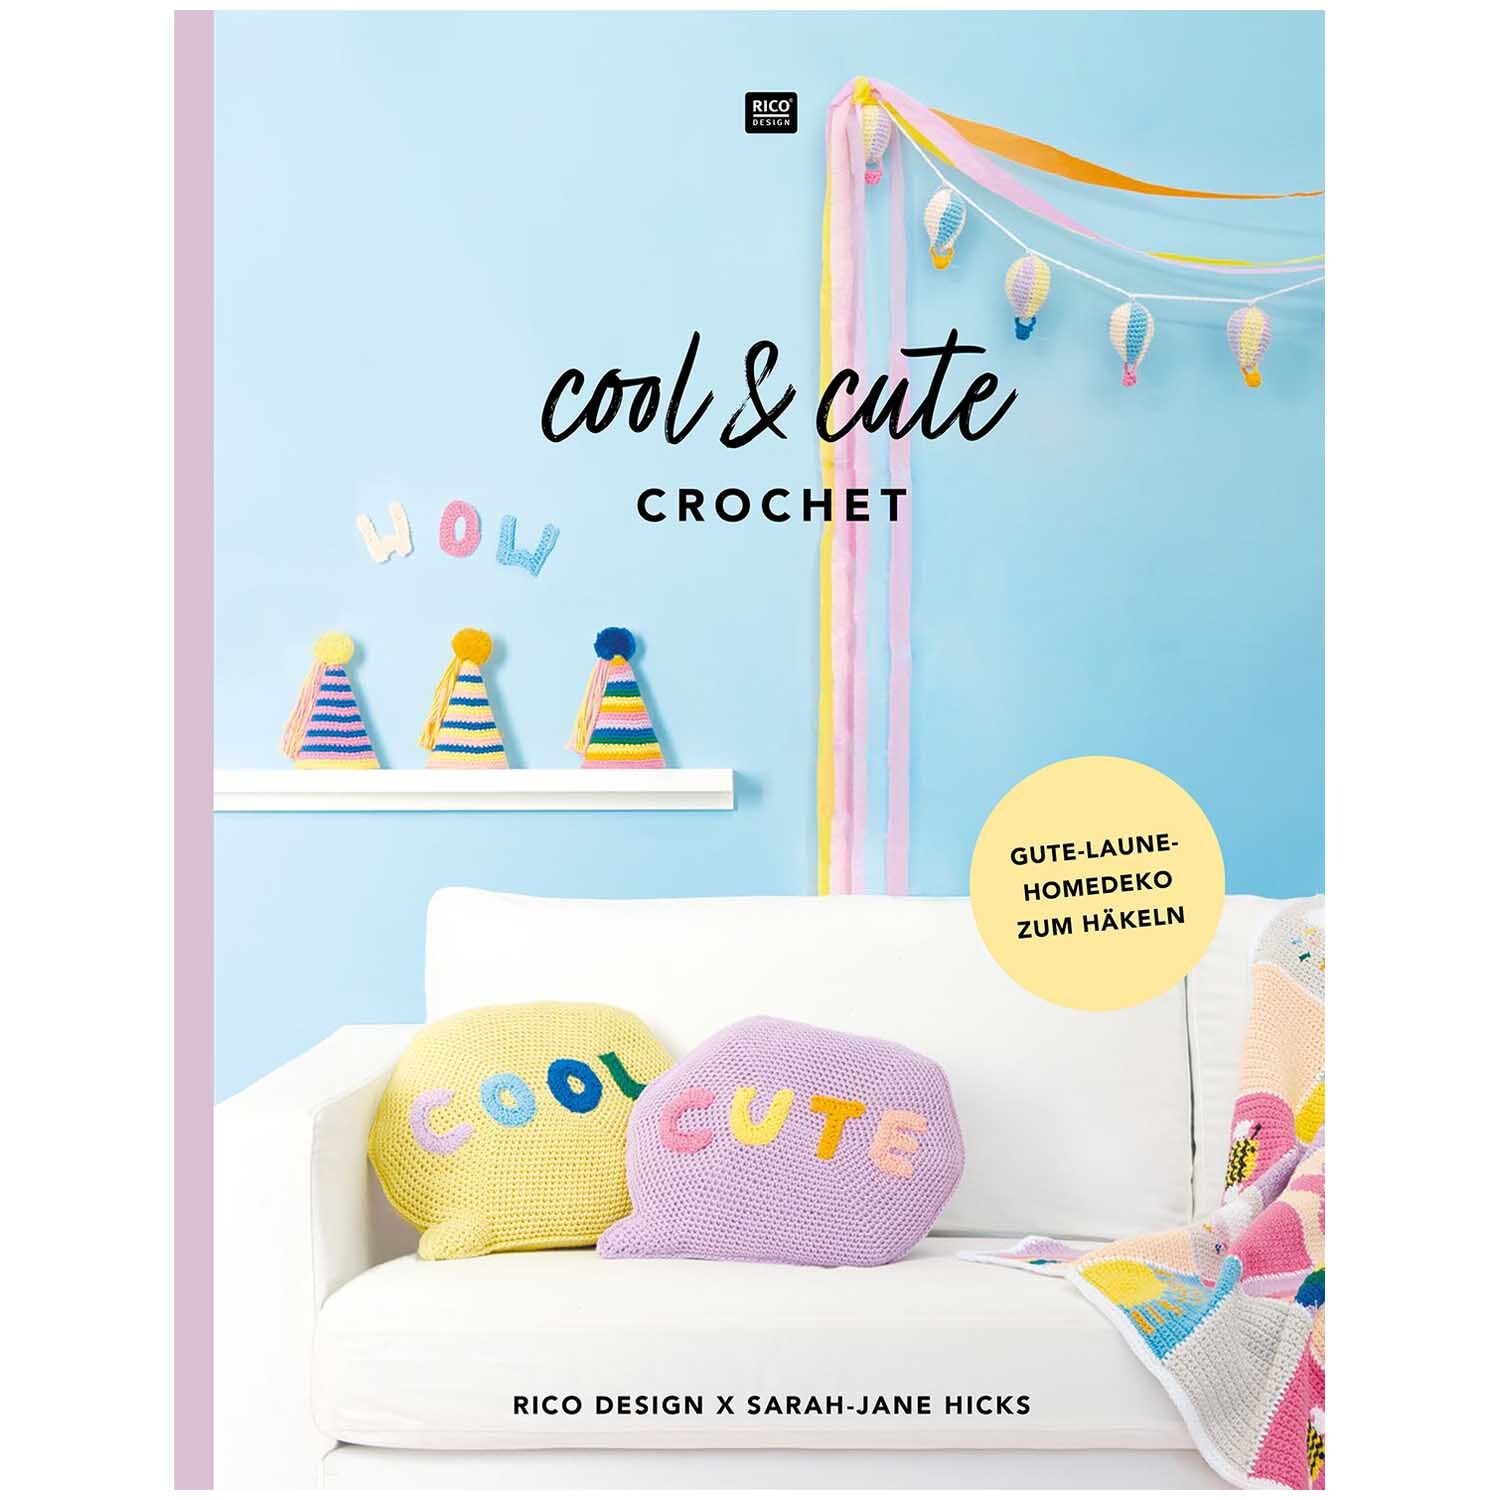 Cool & Cute Crochet